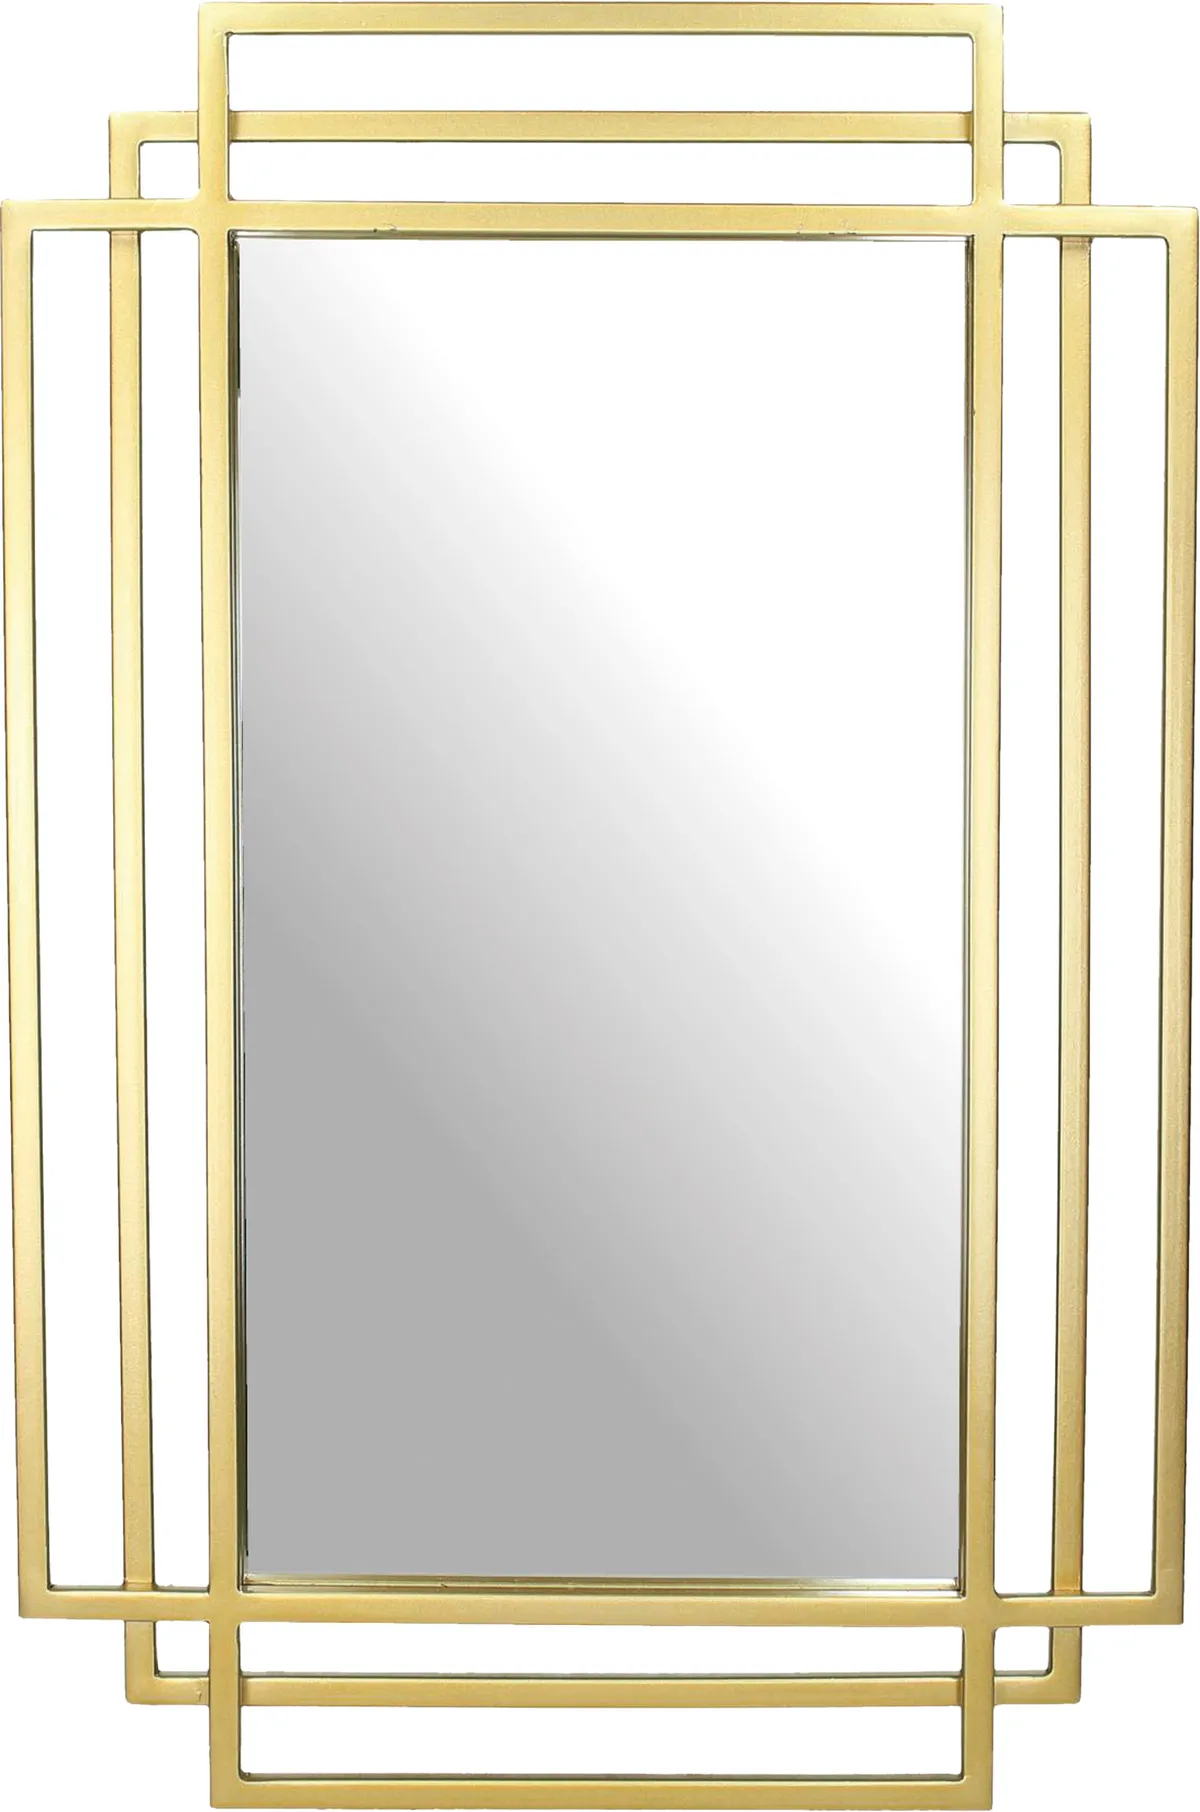 Portrait art deco-style mirror, £68, Audenza